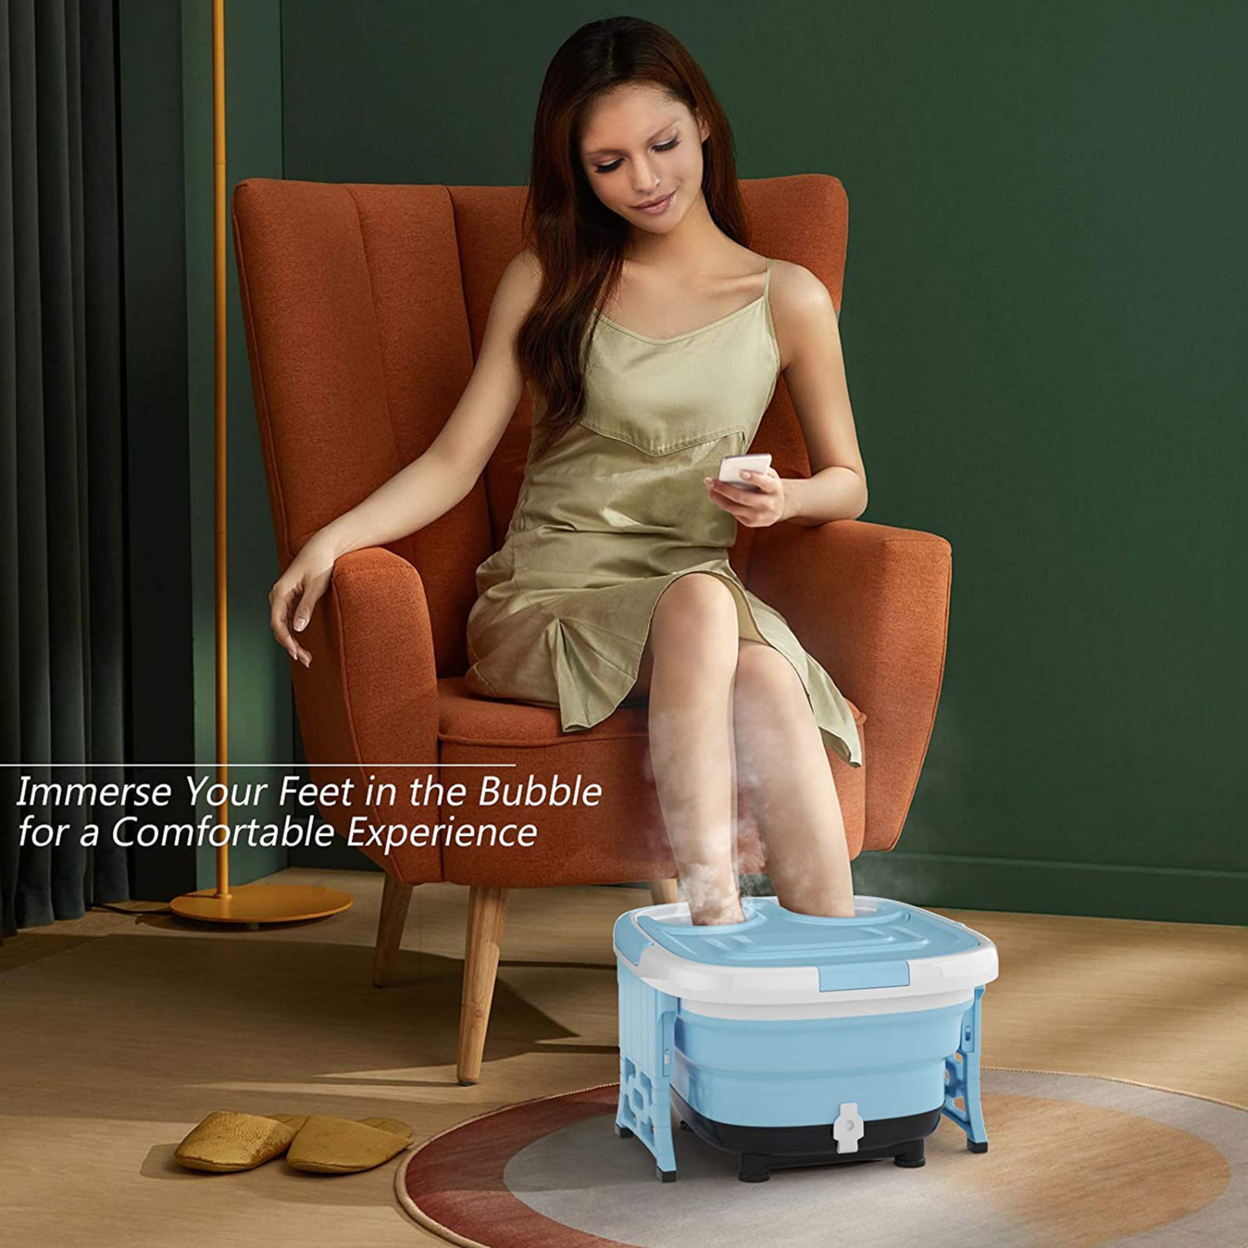 Portable Folding Foot Bath Spa Massager W/ Remote Control Timer Blue